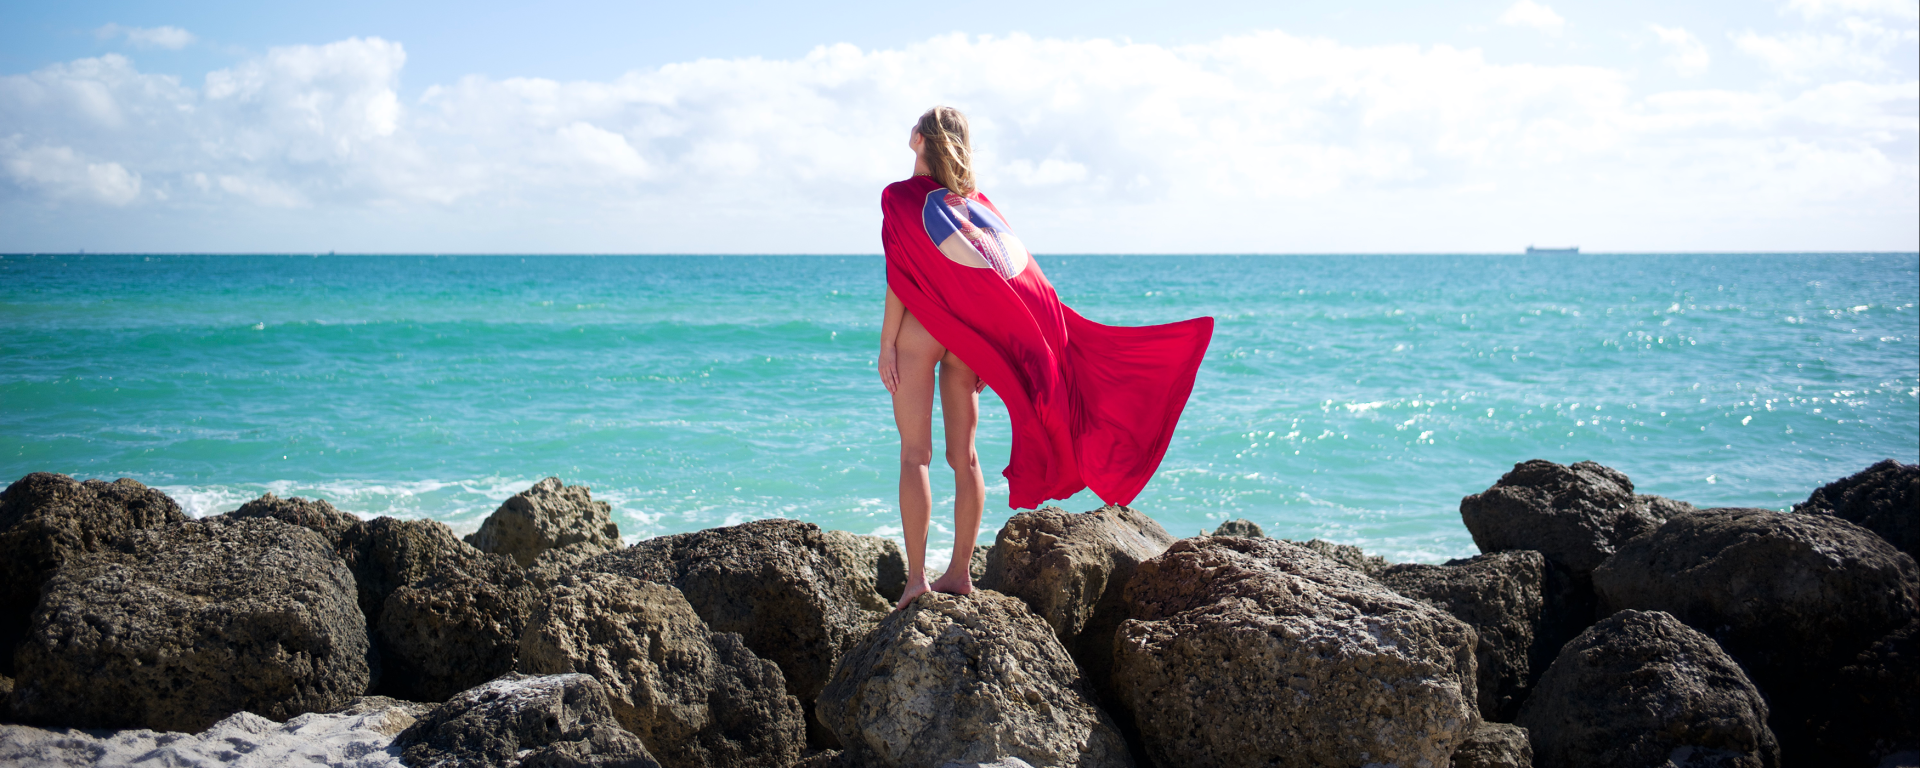 Girl on beach with cape 